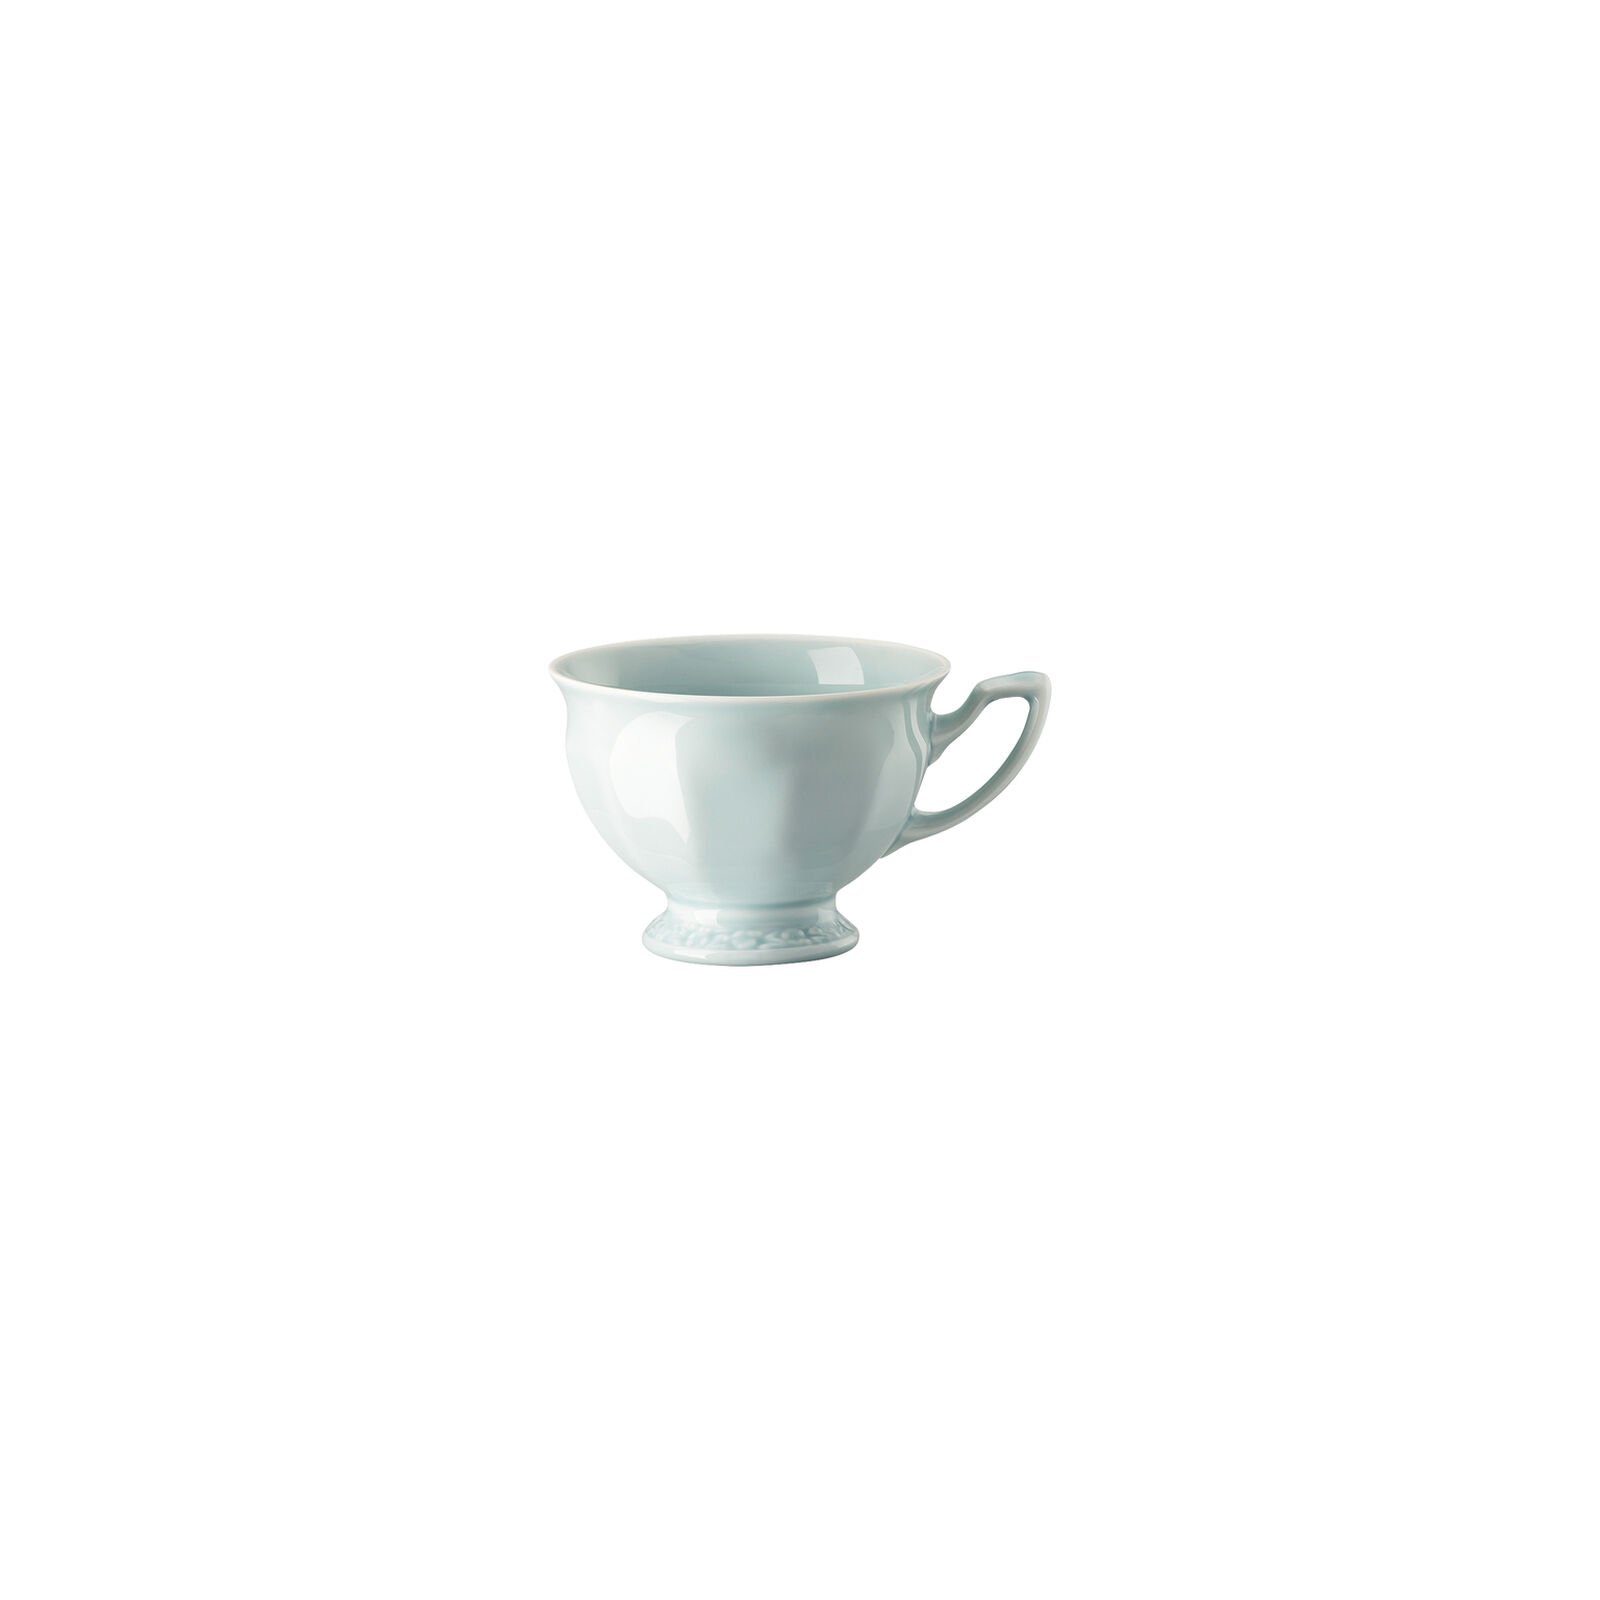 Rosenthal Tasse Maria Pale Mint Kaffee, Porzellan | Tassen